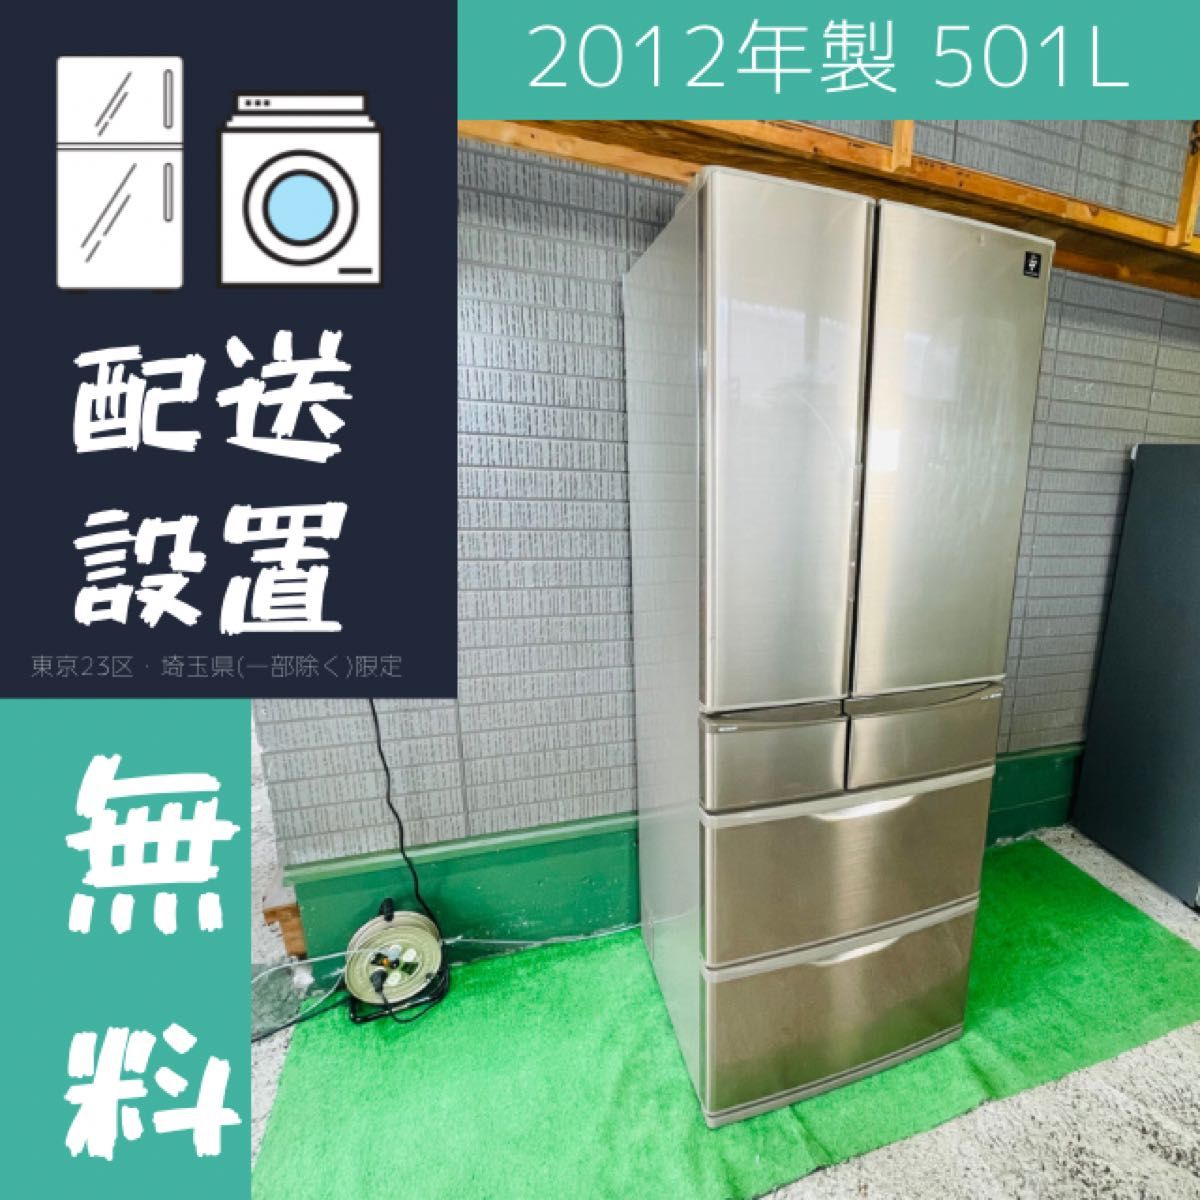 SHARP 501L冷蔵庫 大容量 おしゃれシャンパンカラー【地域限定配送無料】